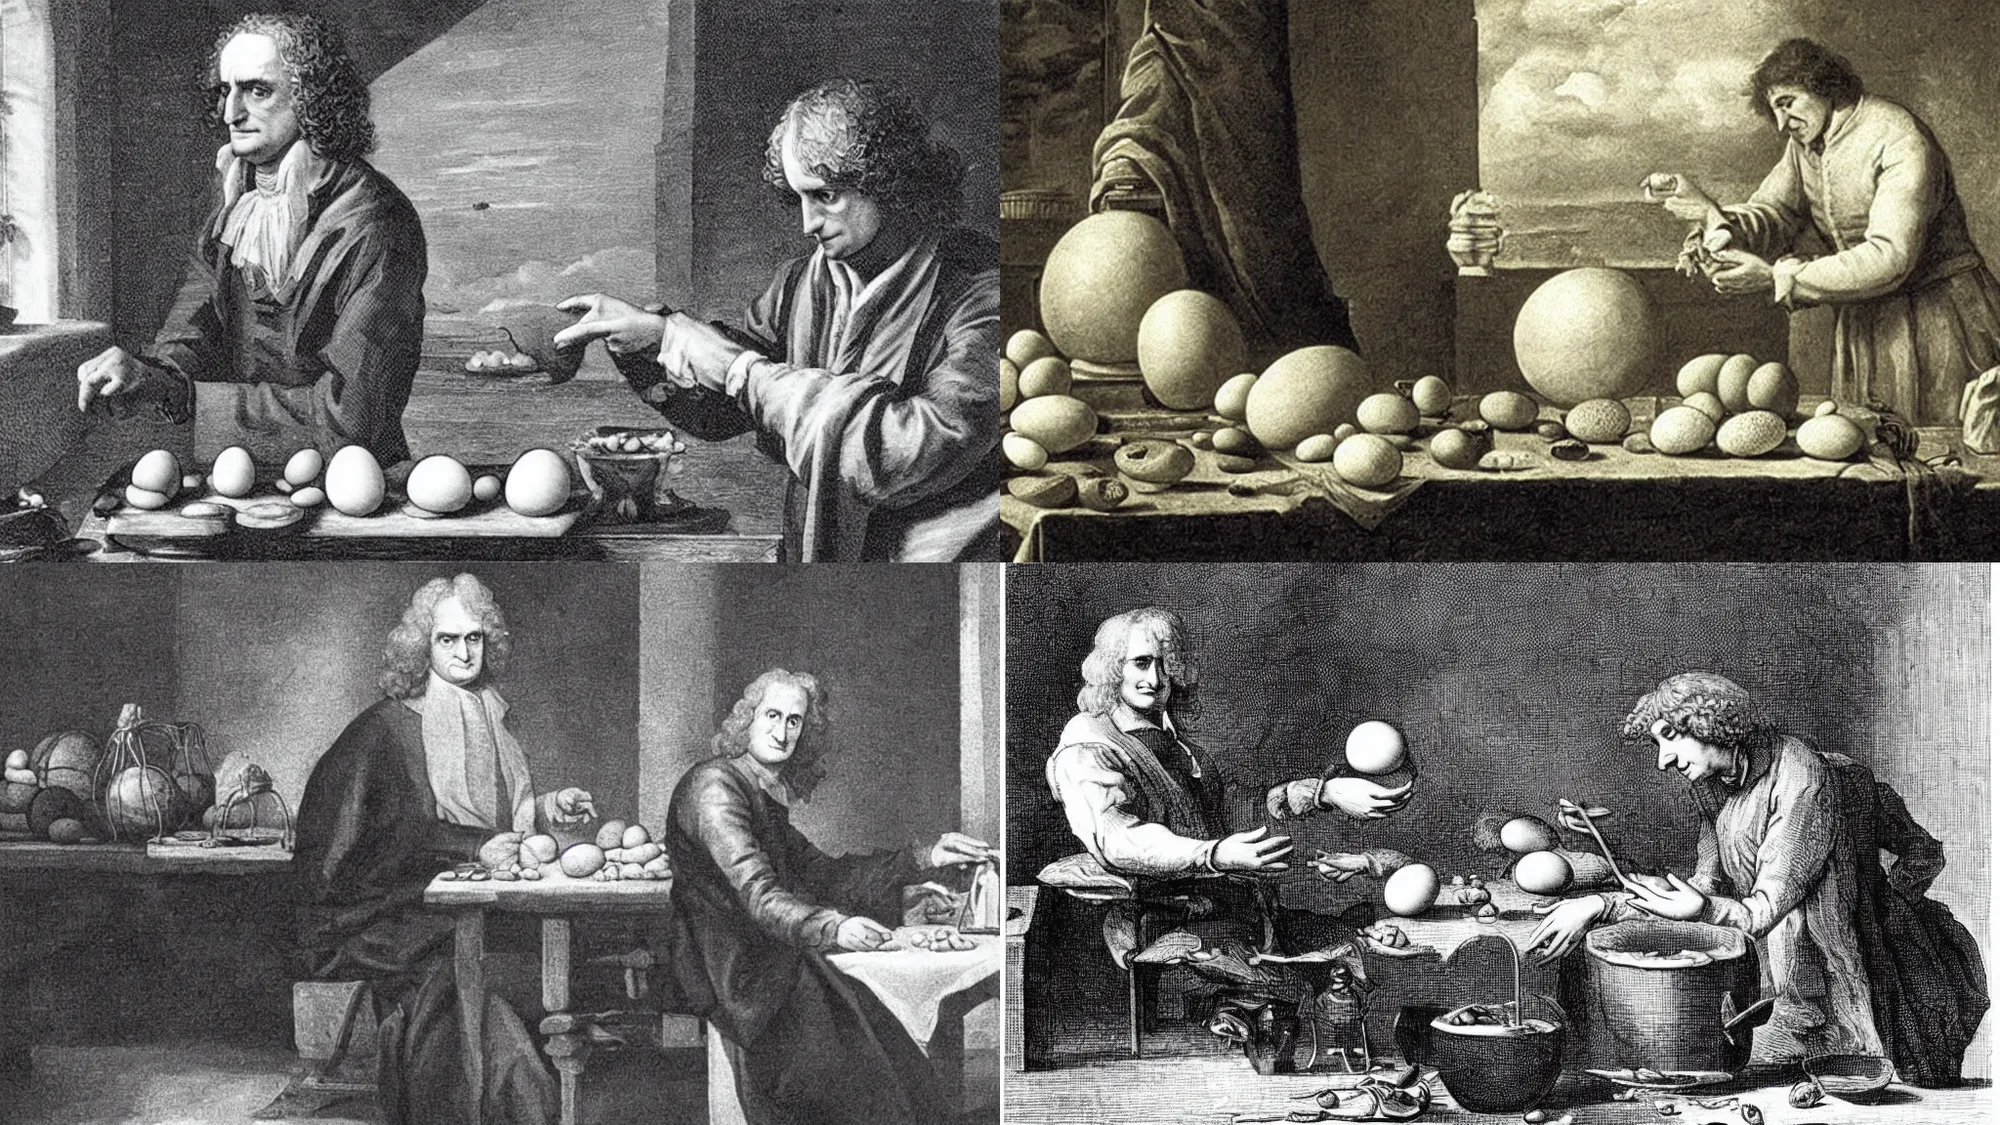 Prompt: Isaac Newton examining eggs